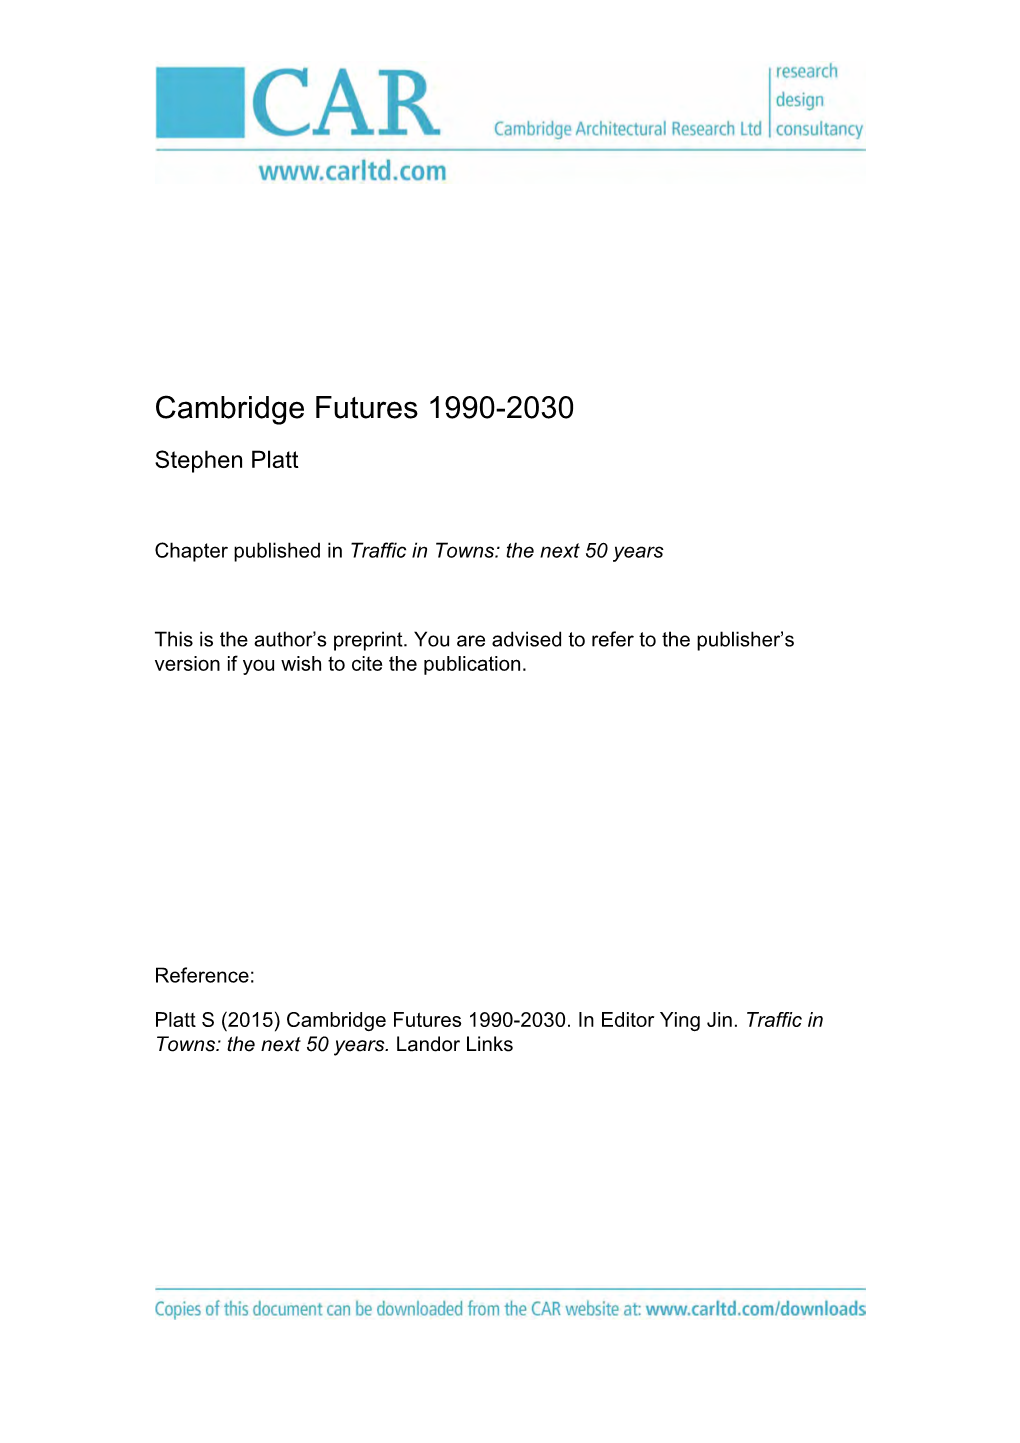 CAR Platt Cambridge Futures 2030